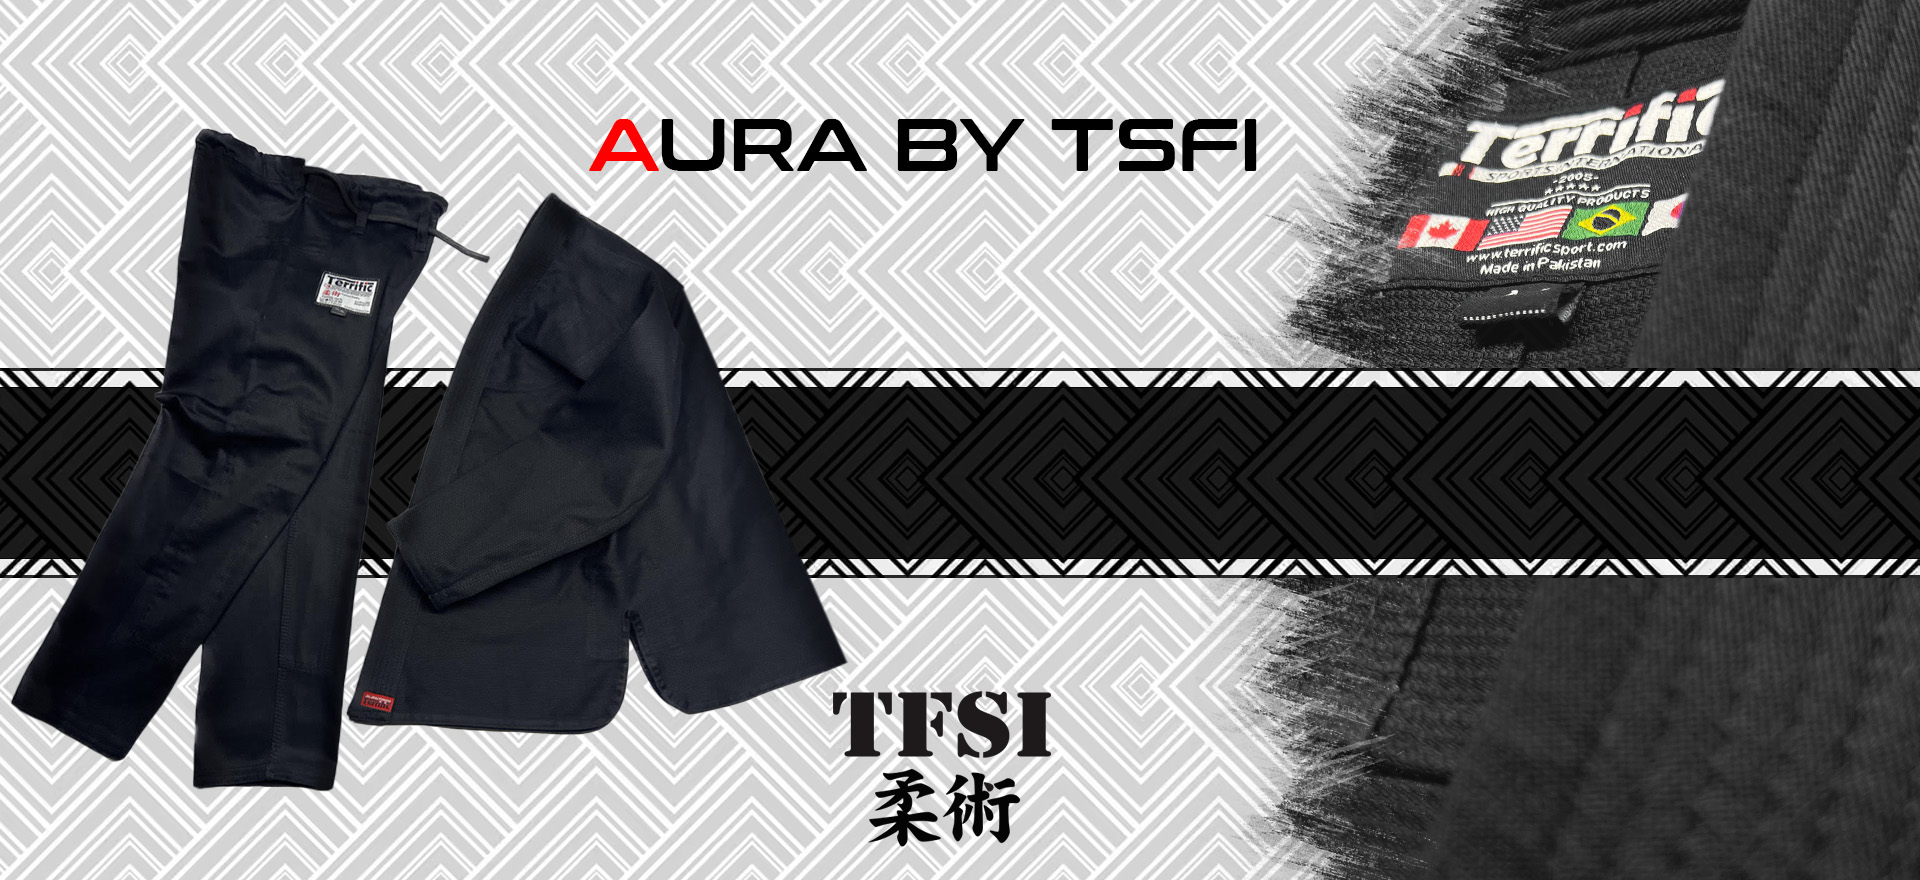 Aura by tsfi slide Black